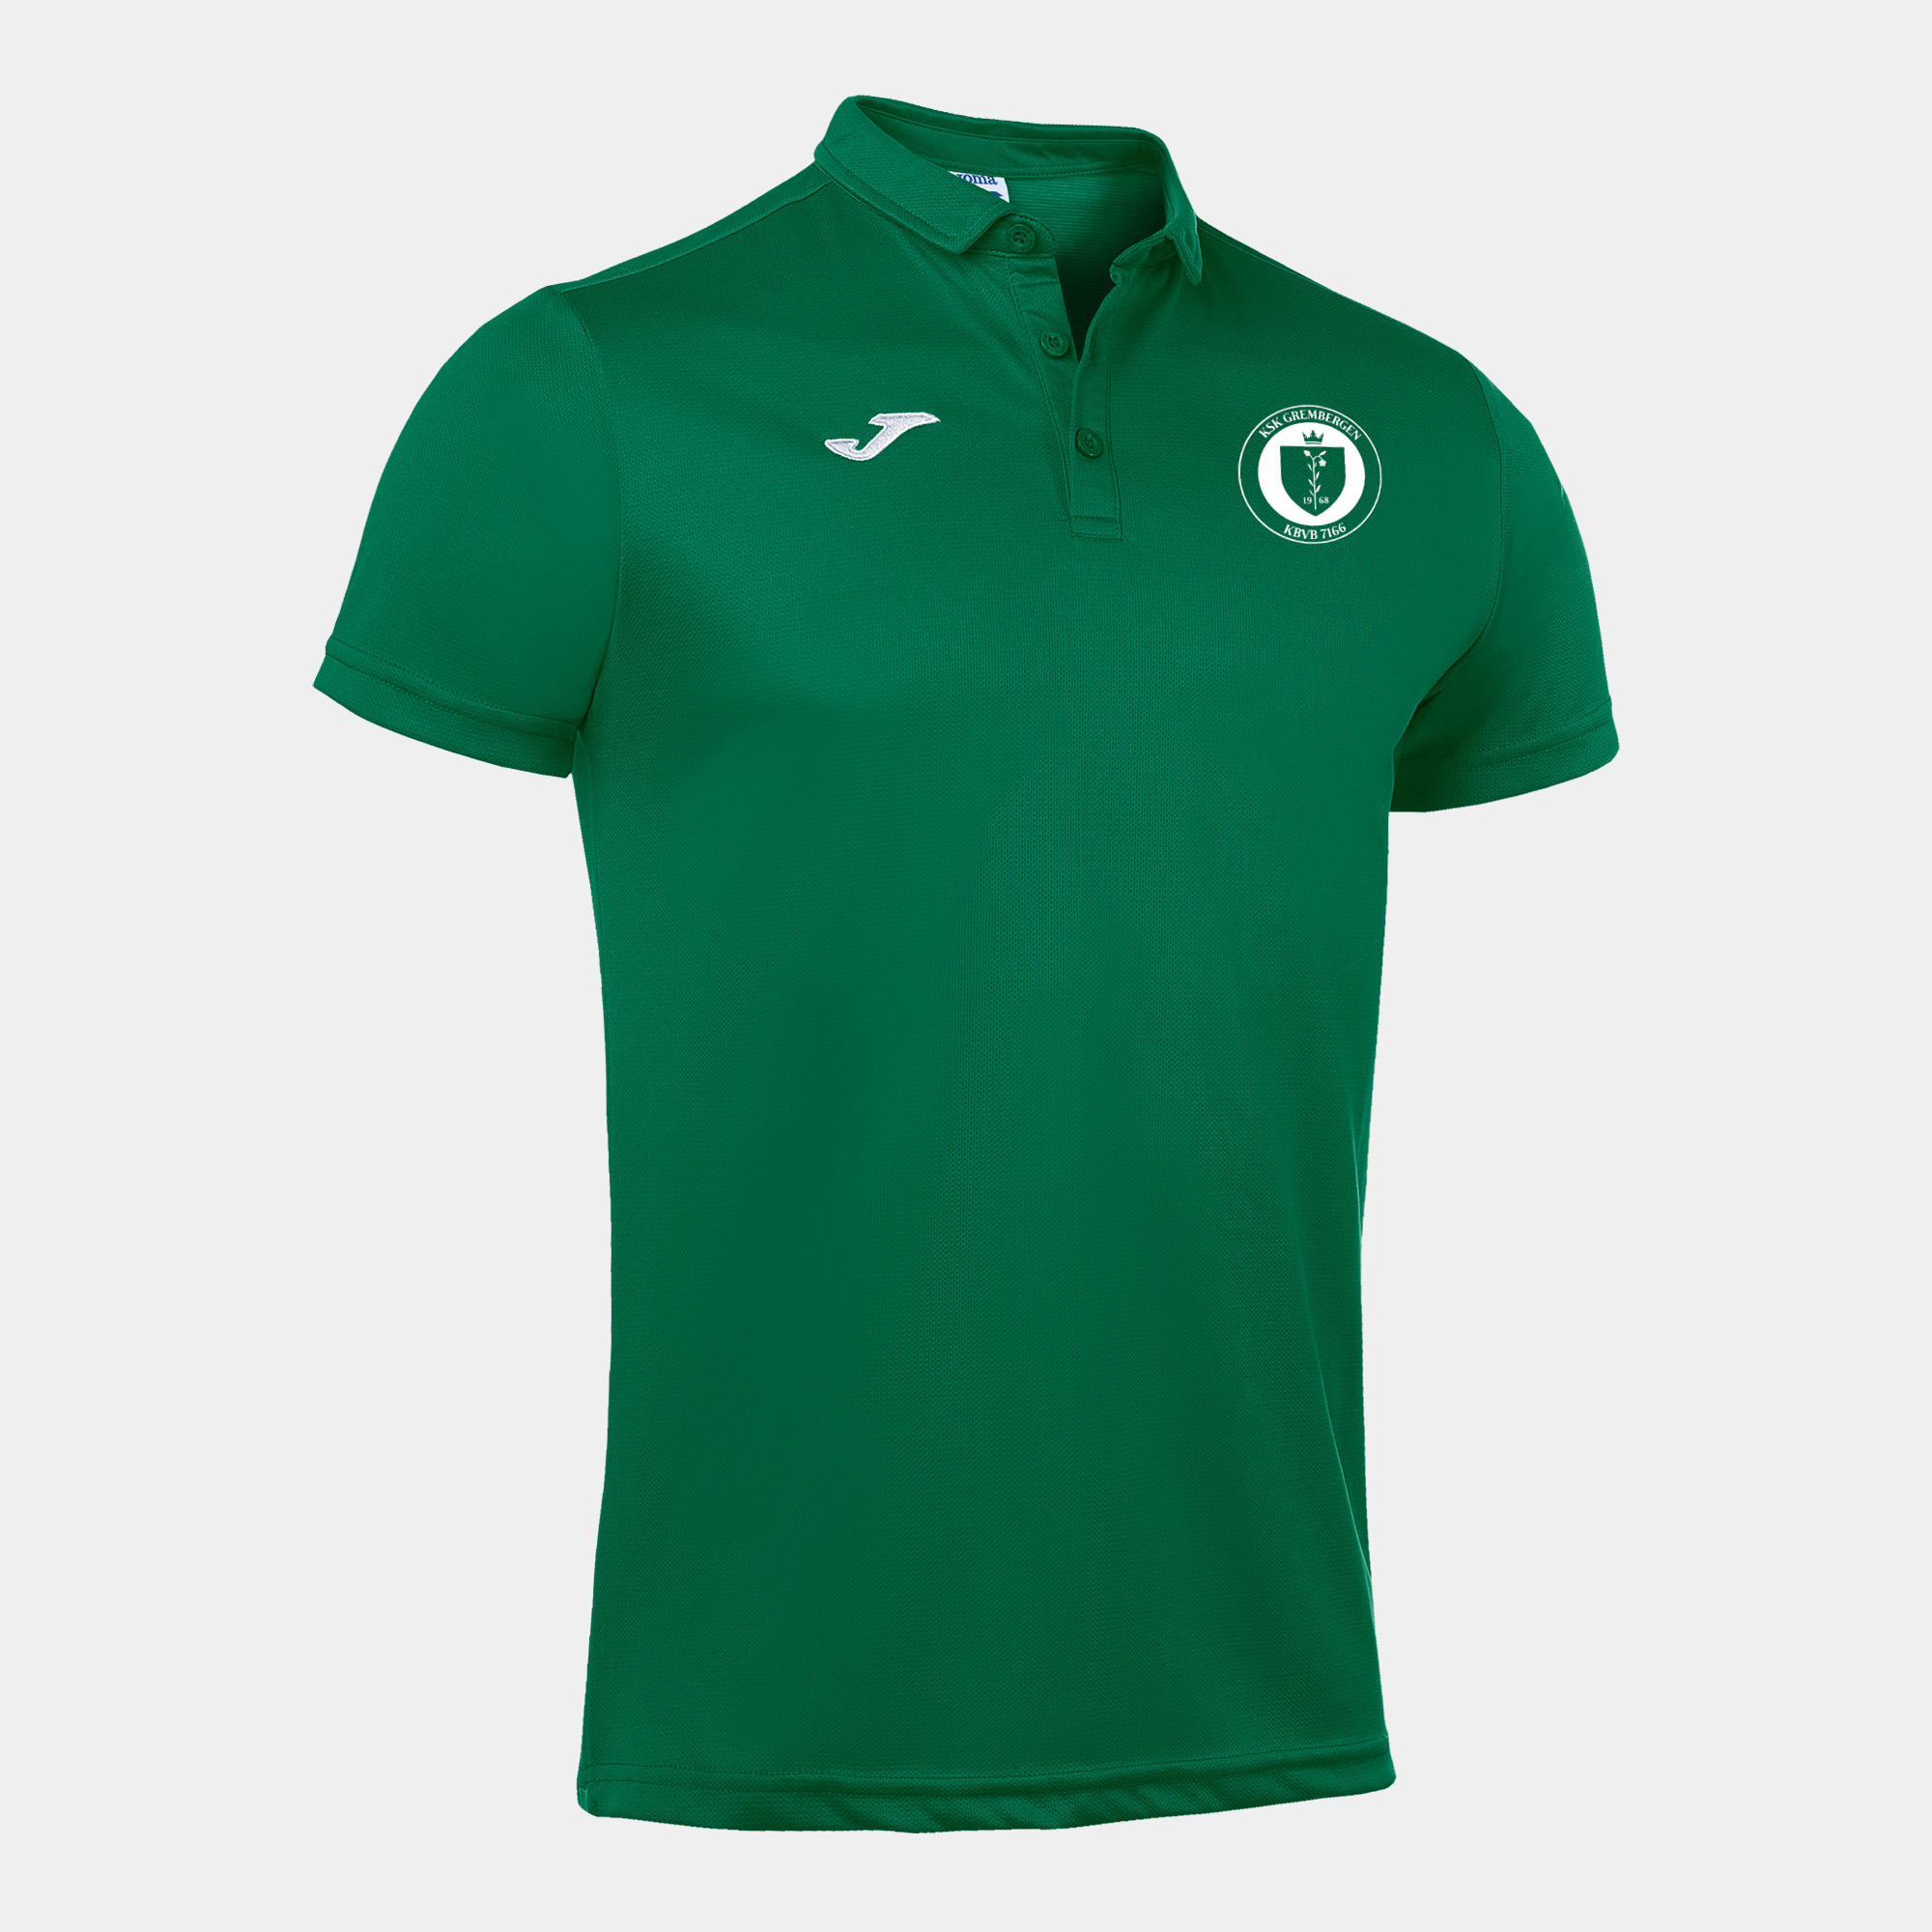 KSK Grembergen - Polo shirt short-sleeve man Hobby green